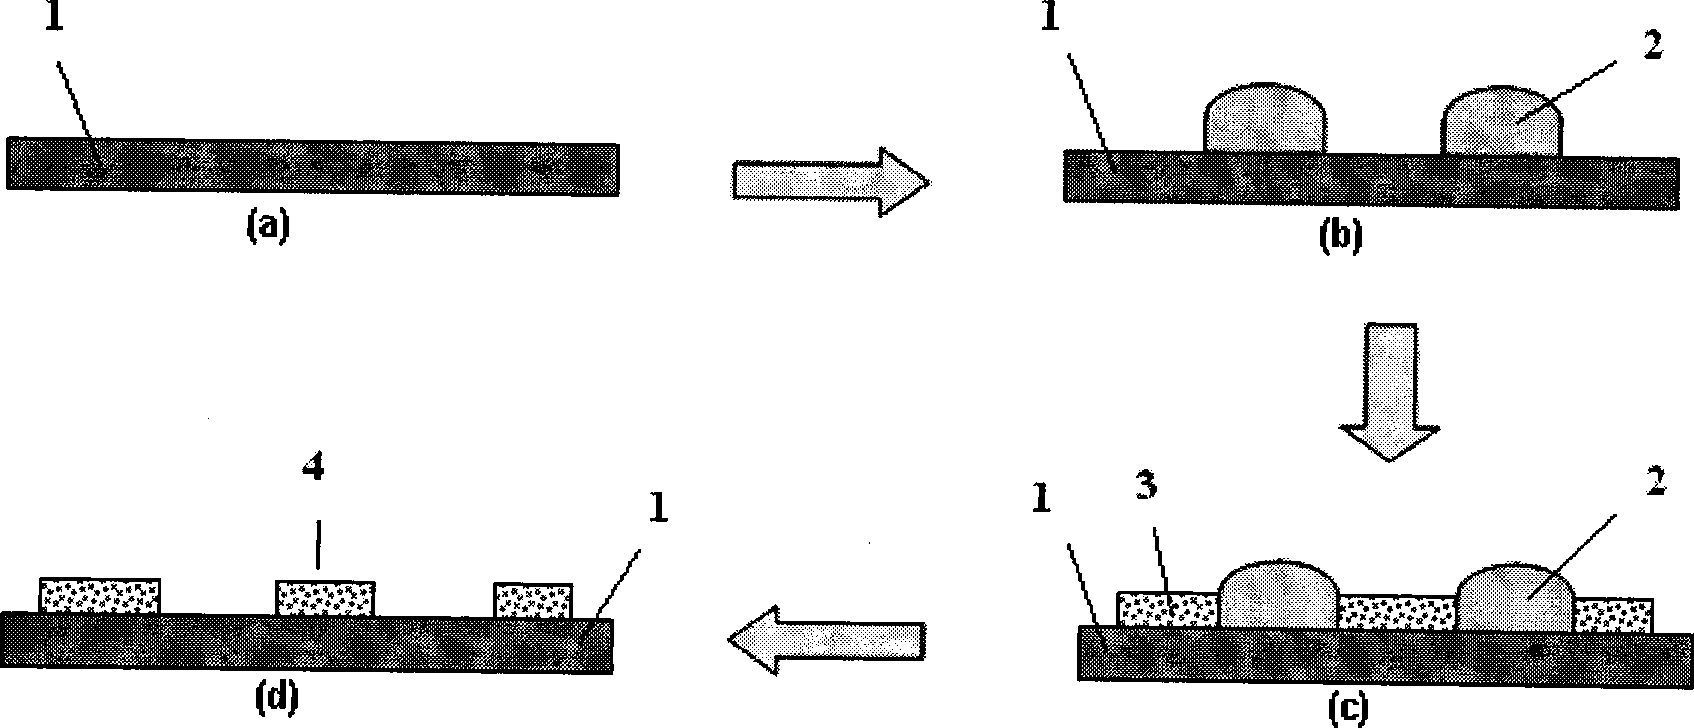 Method for preparing nano porous polypyrrole film using nanobubbles as templates